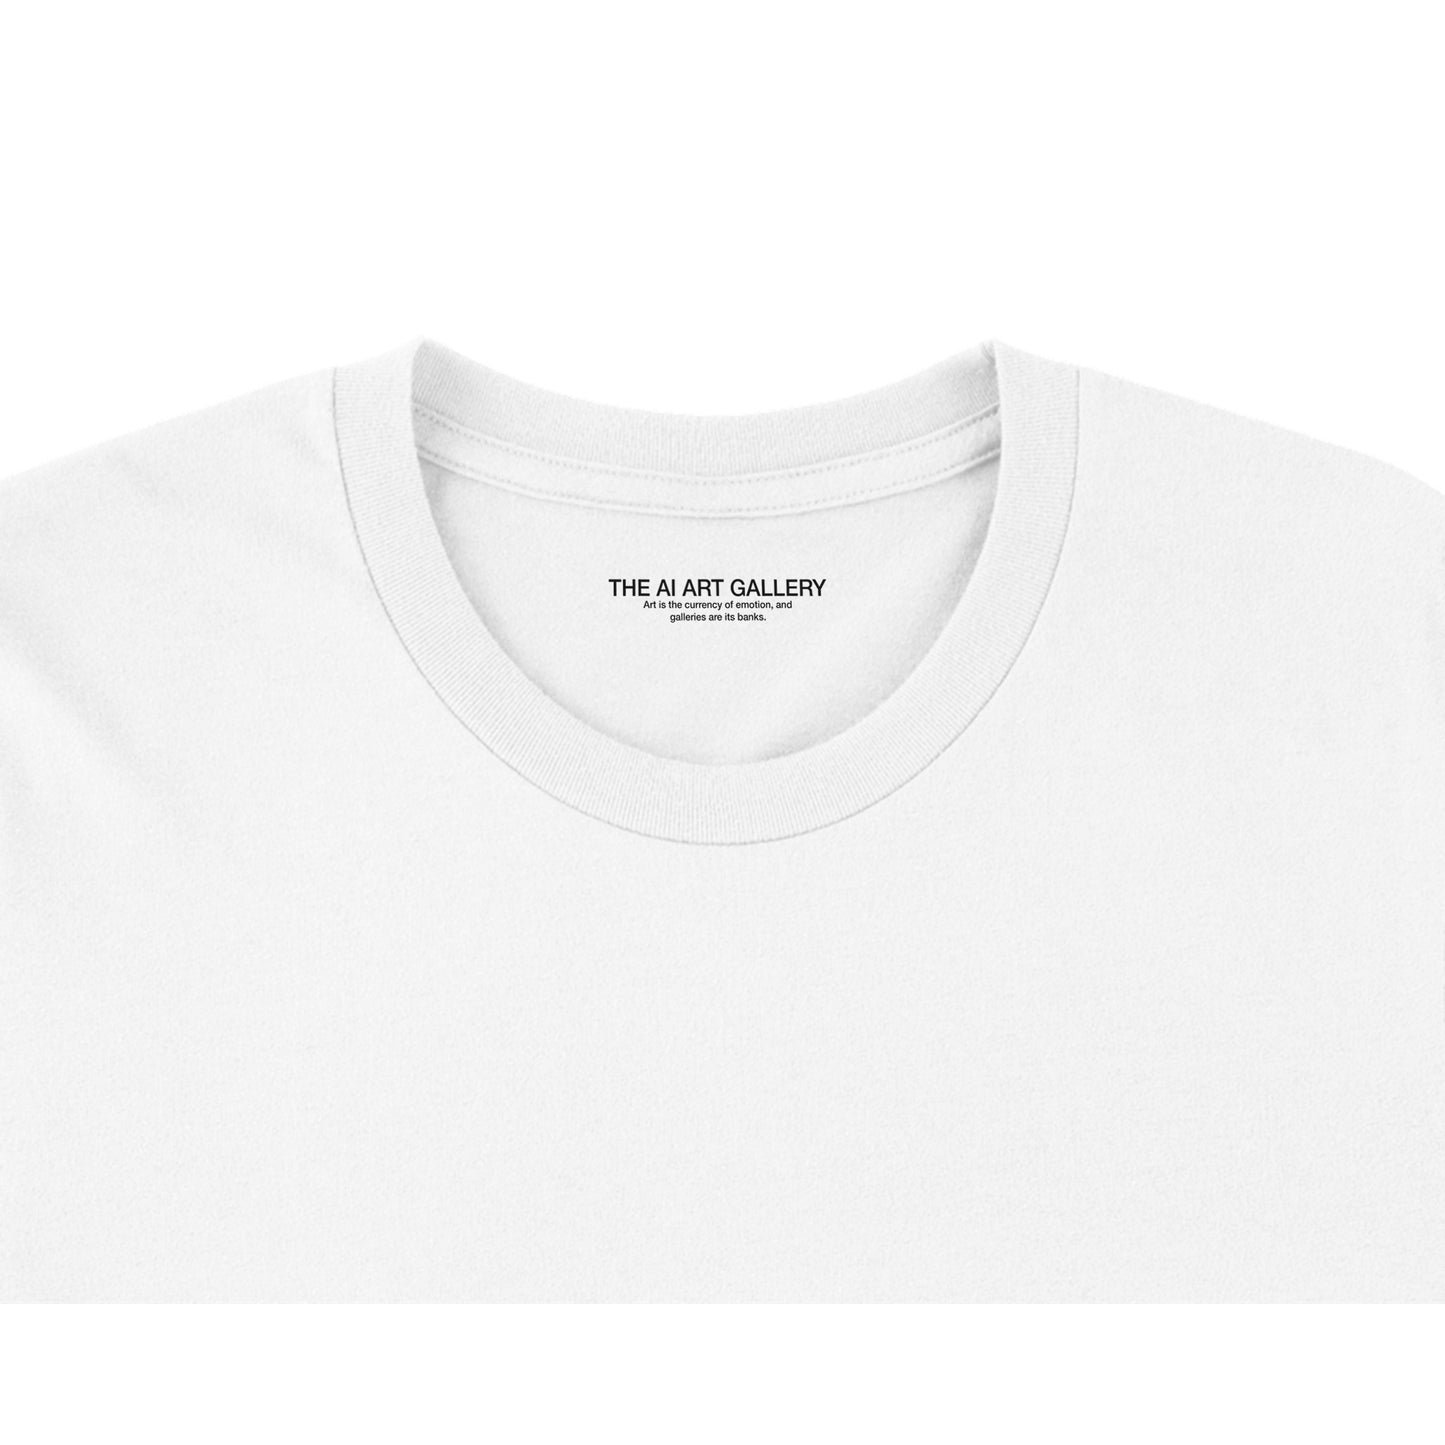 FUMIGANS FRATRIBUS / T-Shirt / white